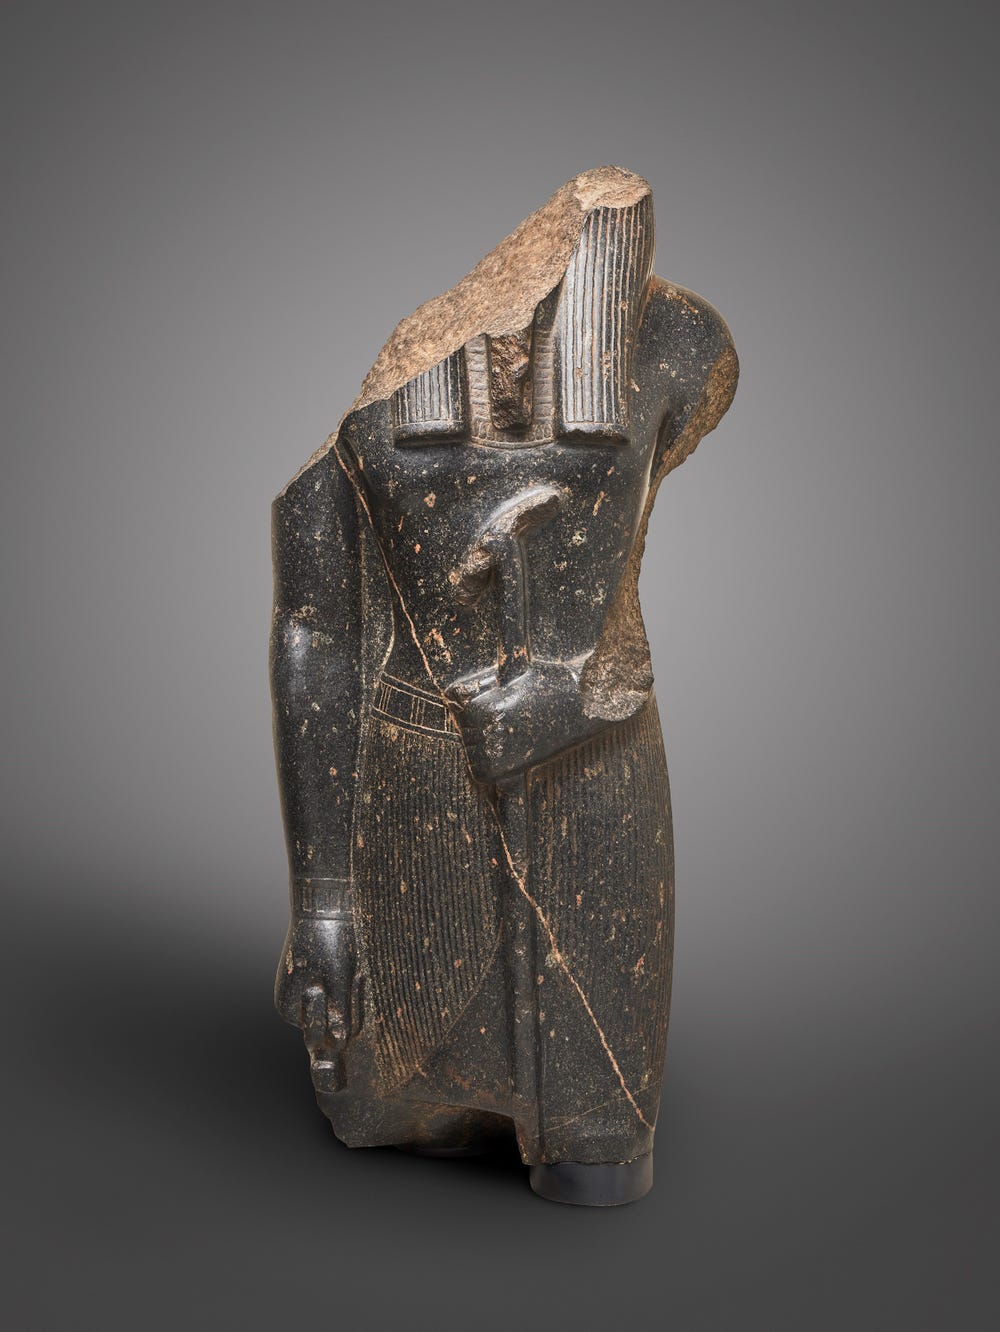 partial sculpture showing the torso of a god